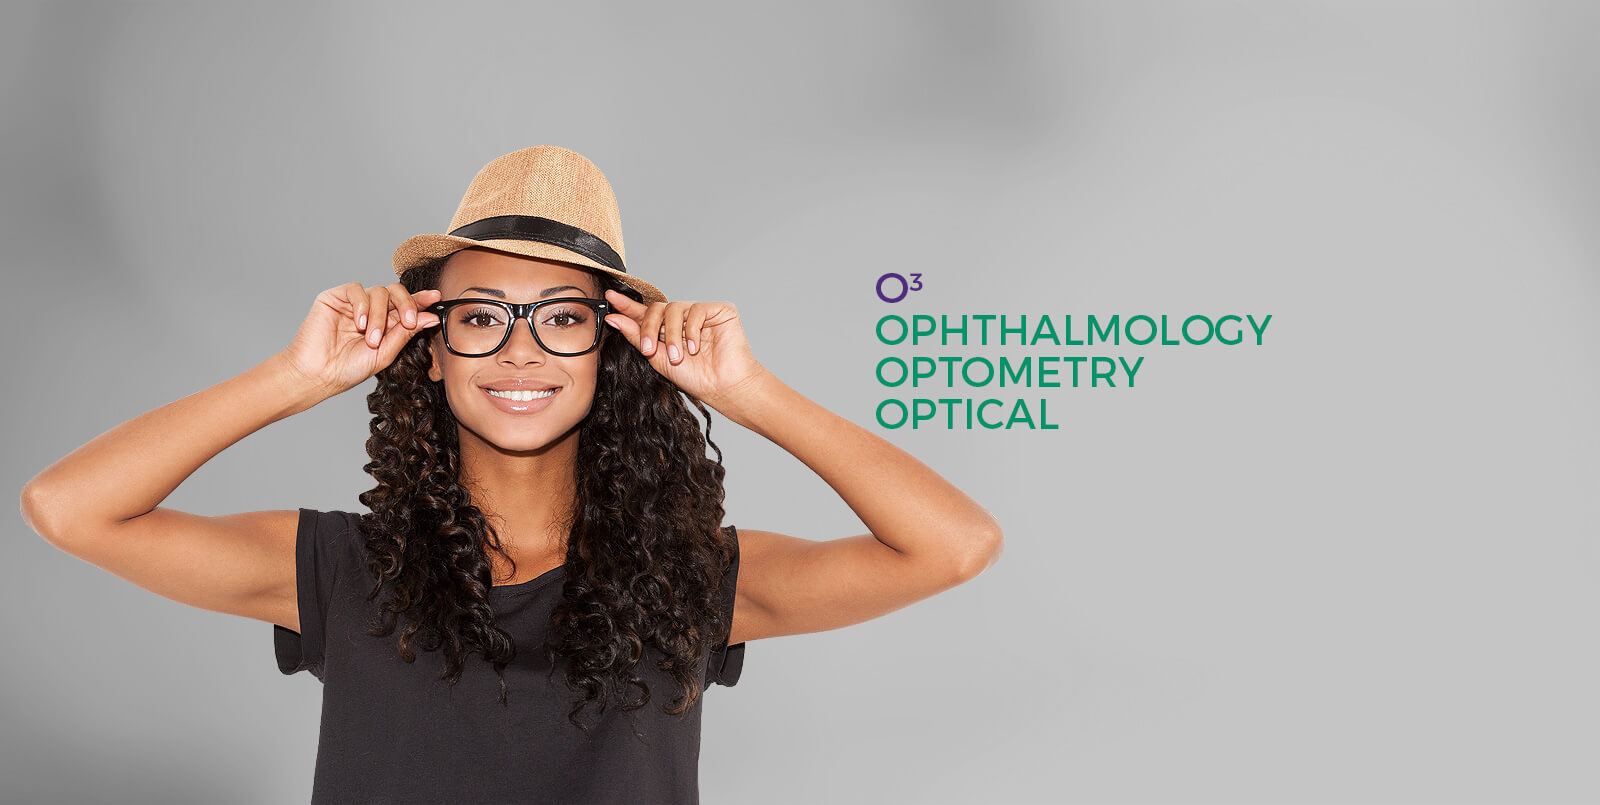 O3, Ophthalmology, Optometry, Optical